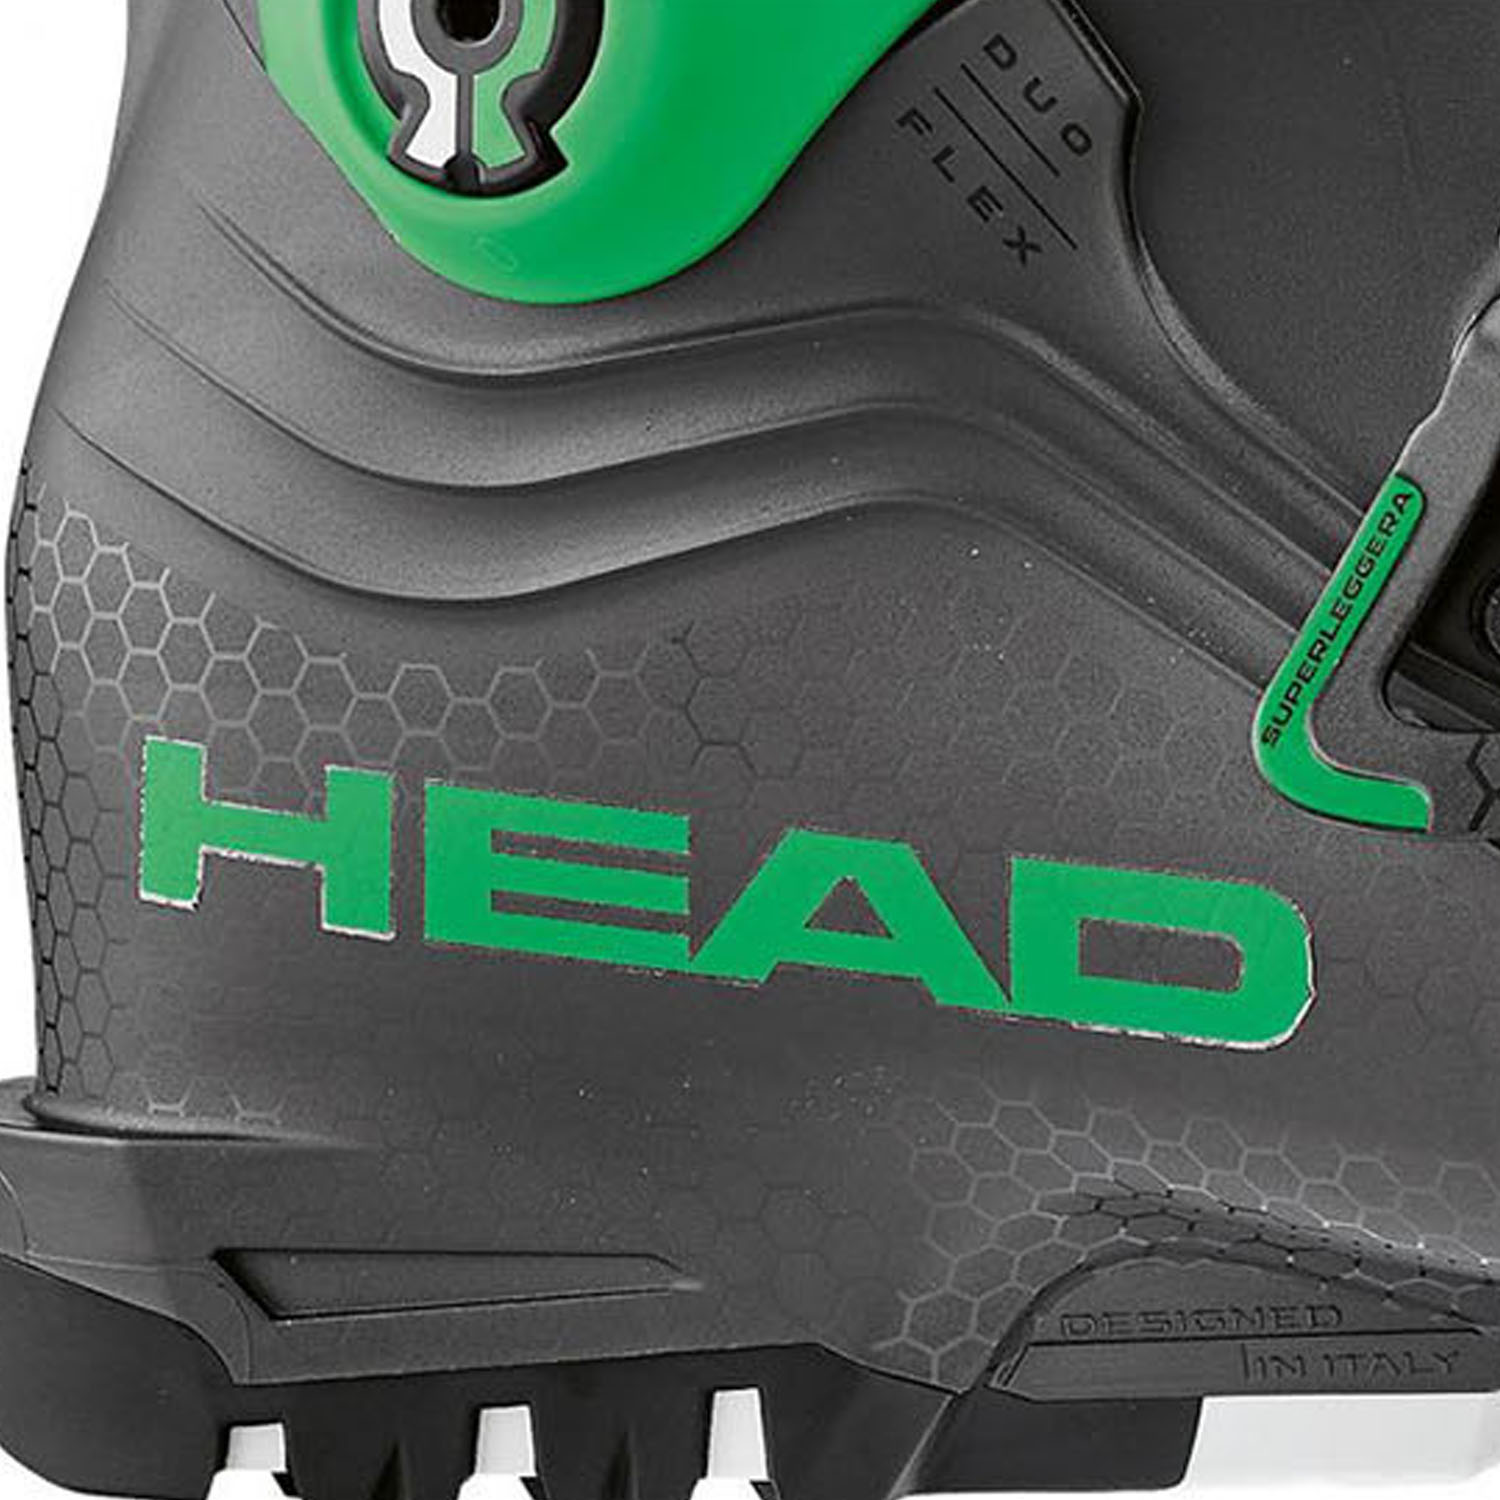 Горнолыжные ботинки HEAD Nexo LYT 120 Anthracite/Green